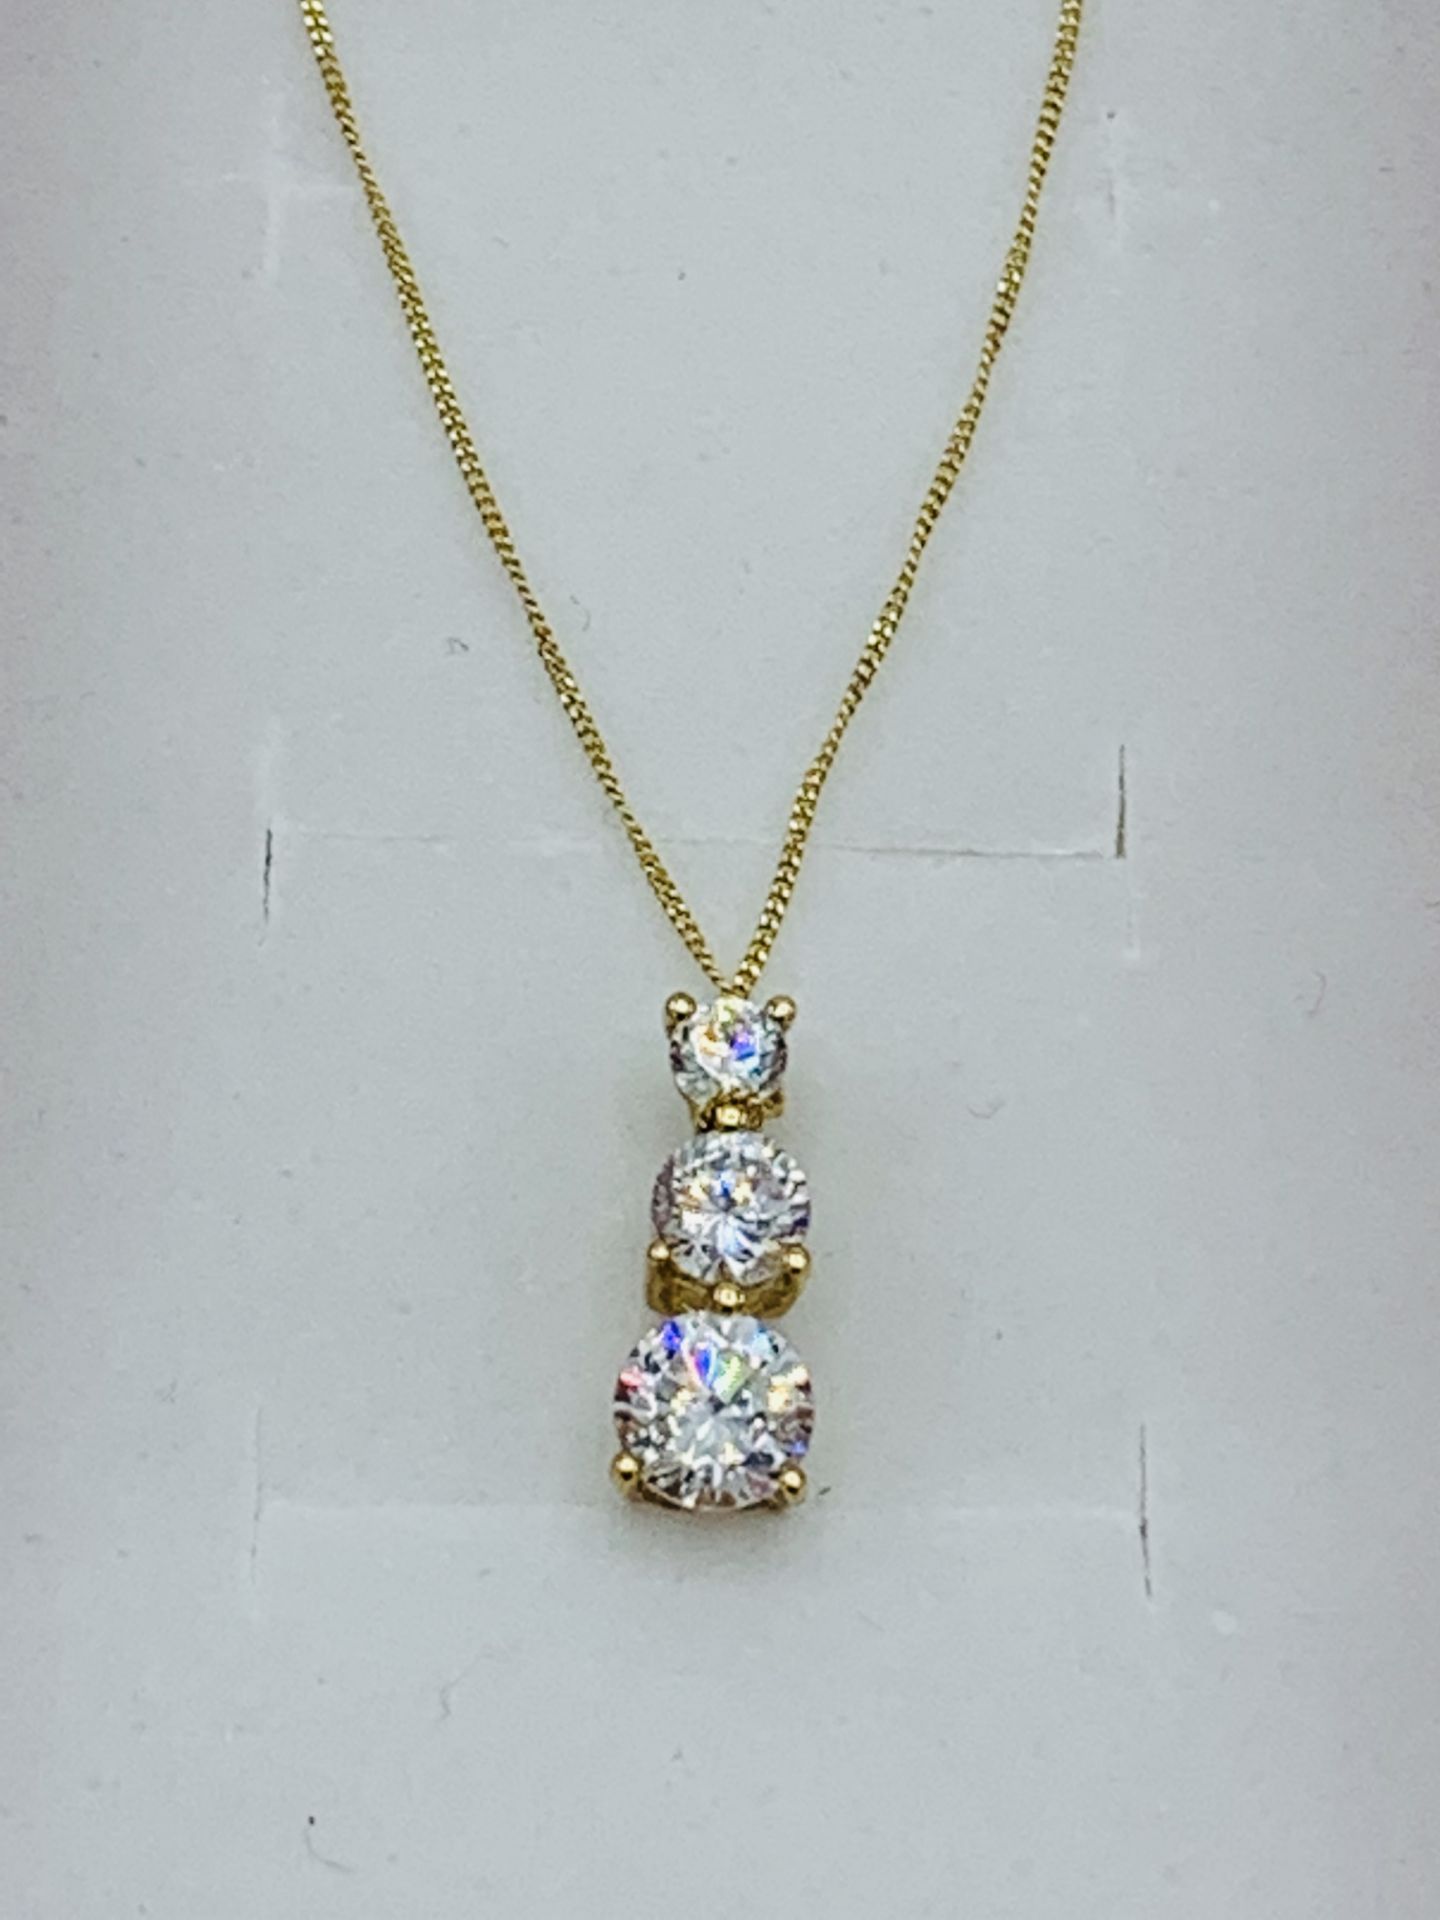 9ct gold pendant necklace set with three zircon stones. Estimate £30-40. - Image 2 of 2